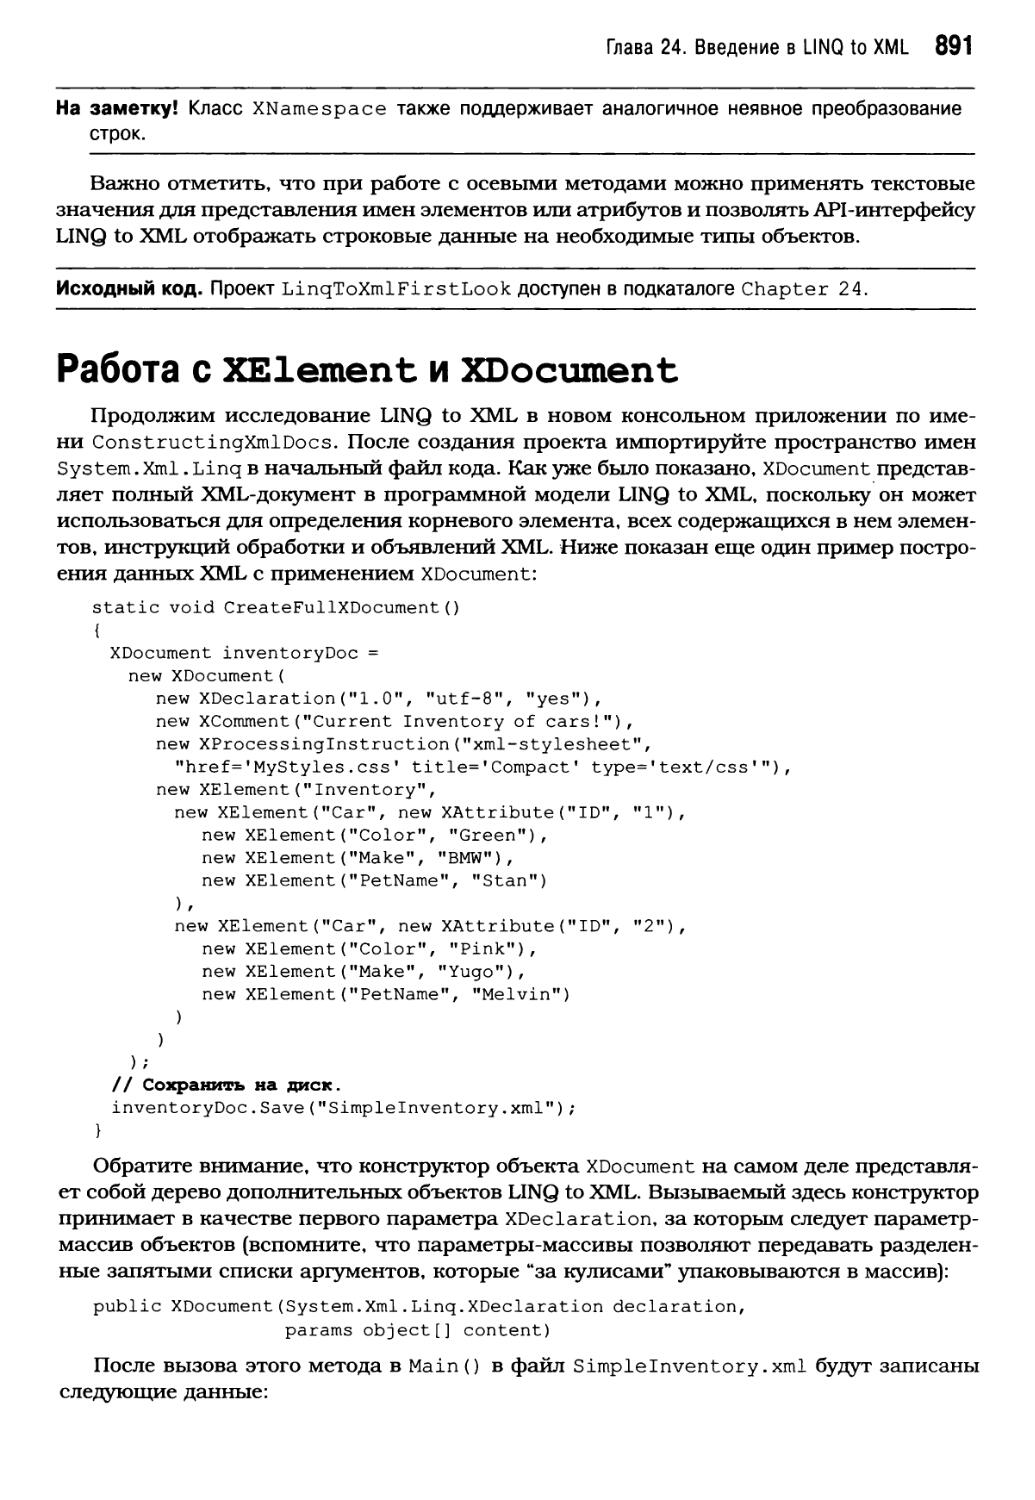 Работа с XElement и XDocument